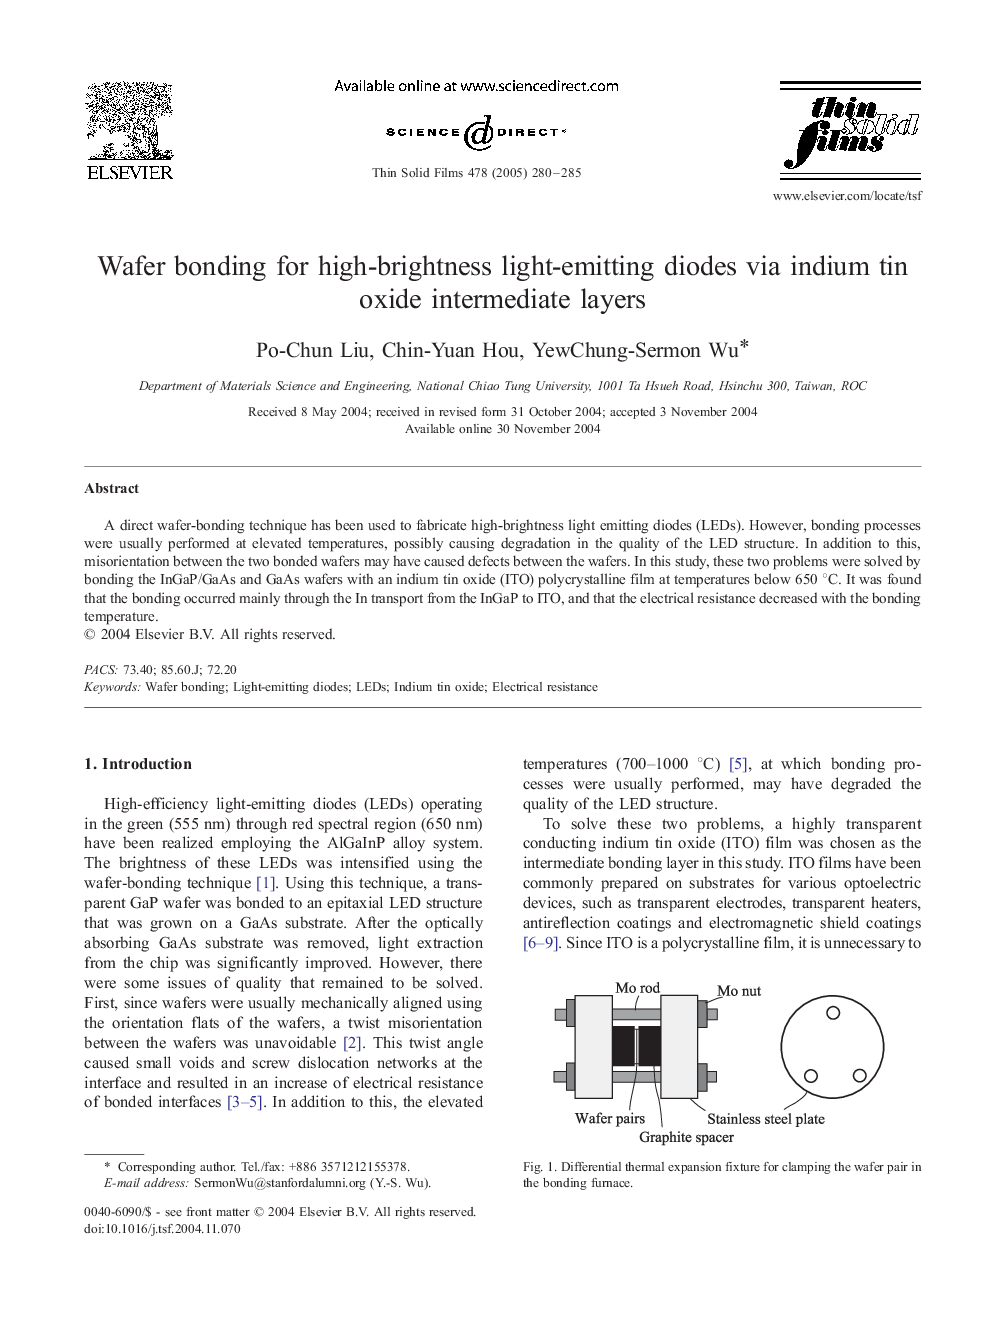 Wafer bonding for high-brightness light-emitting diodes via indium tin oxide intermediate layers